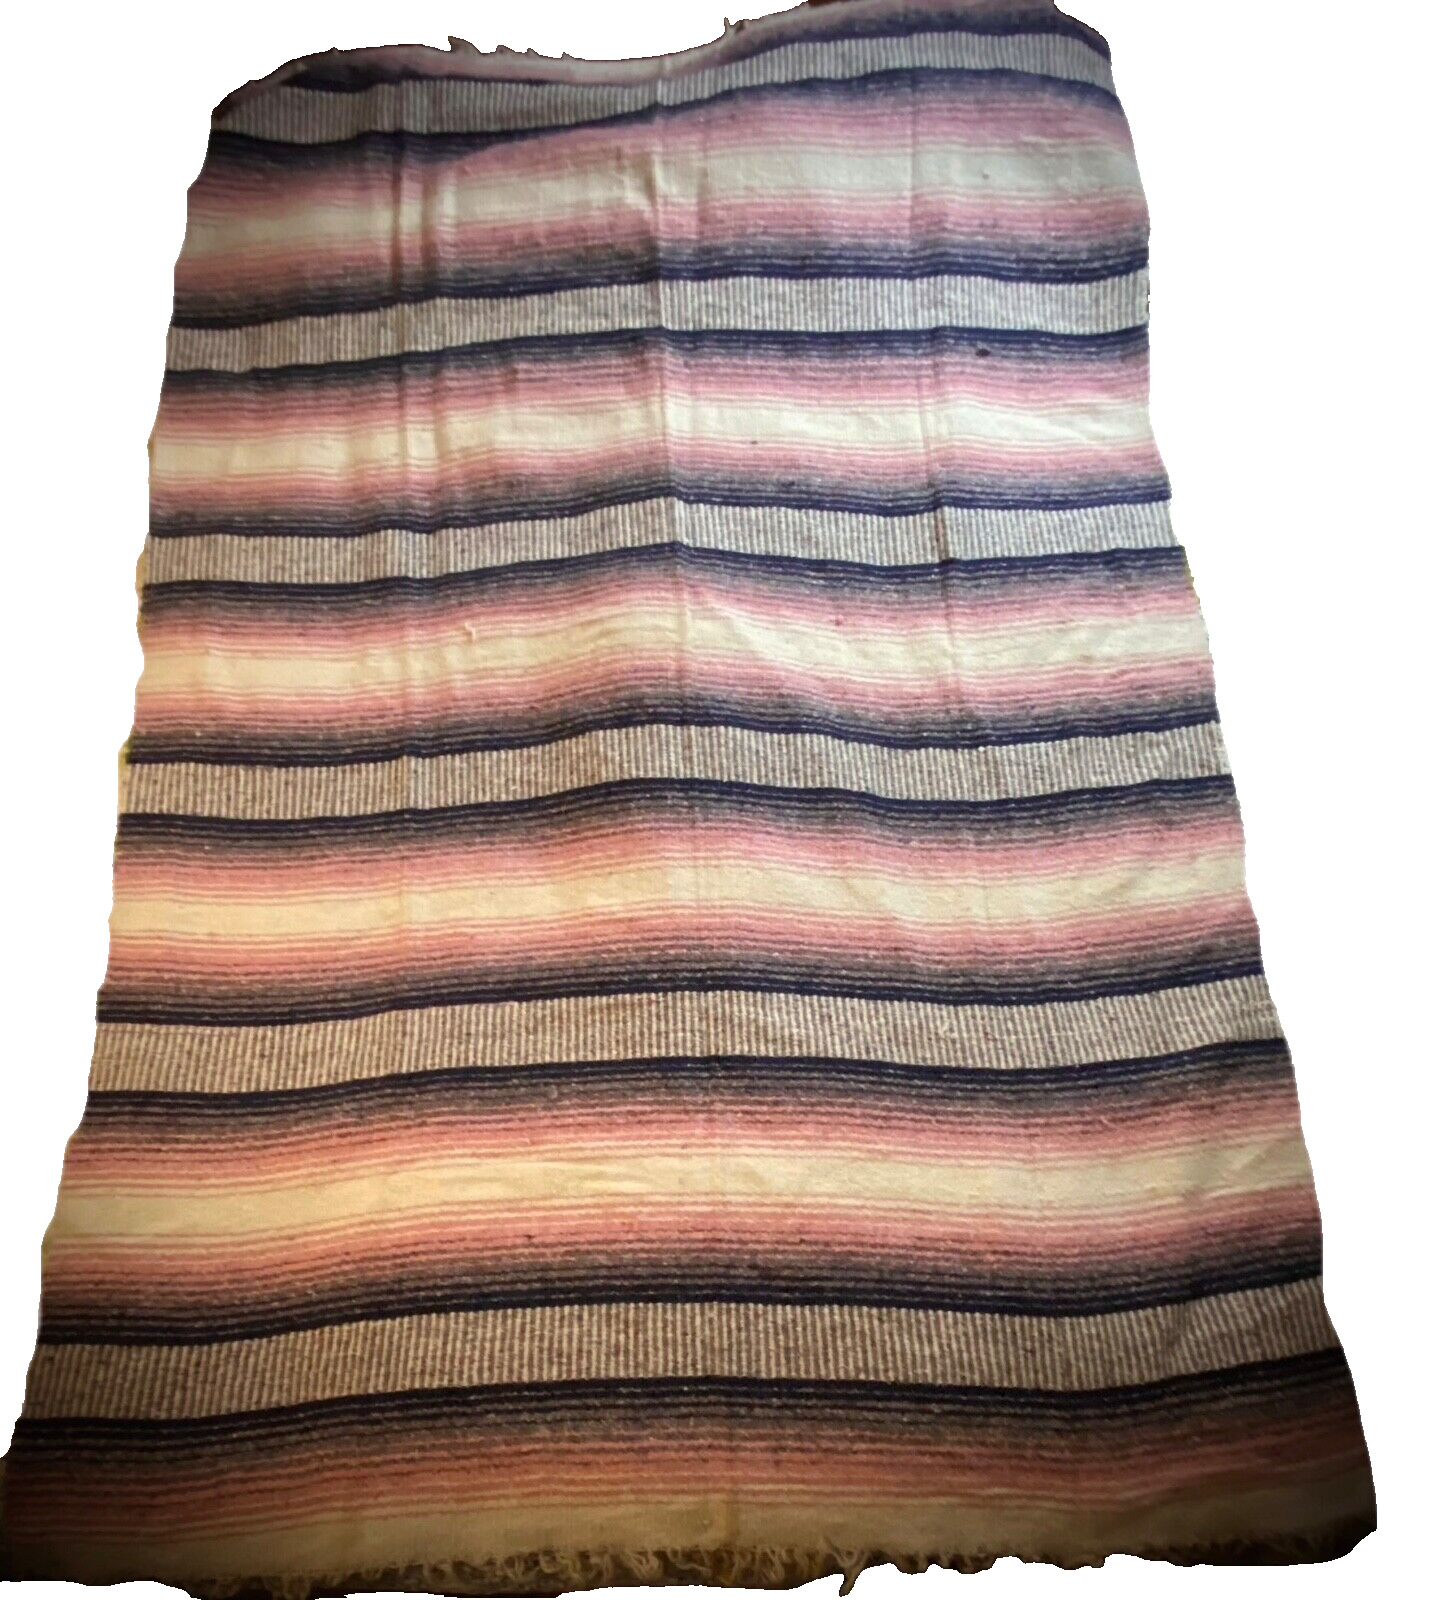 Vintage Striped Boho Cotton Rug Blanket Handwoven Mexico or Morocco? 80” x 55”